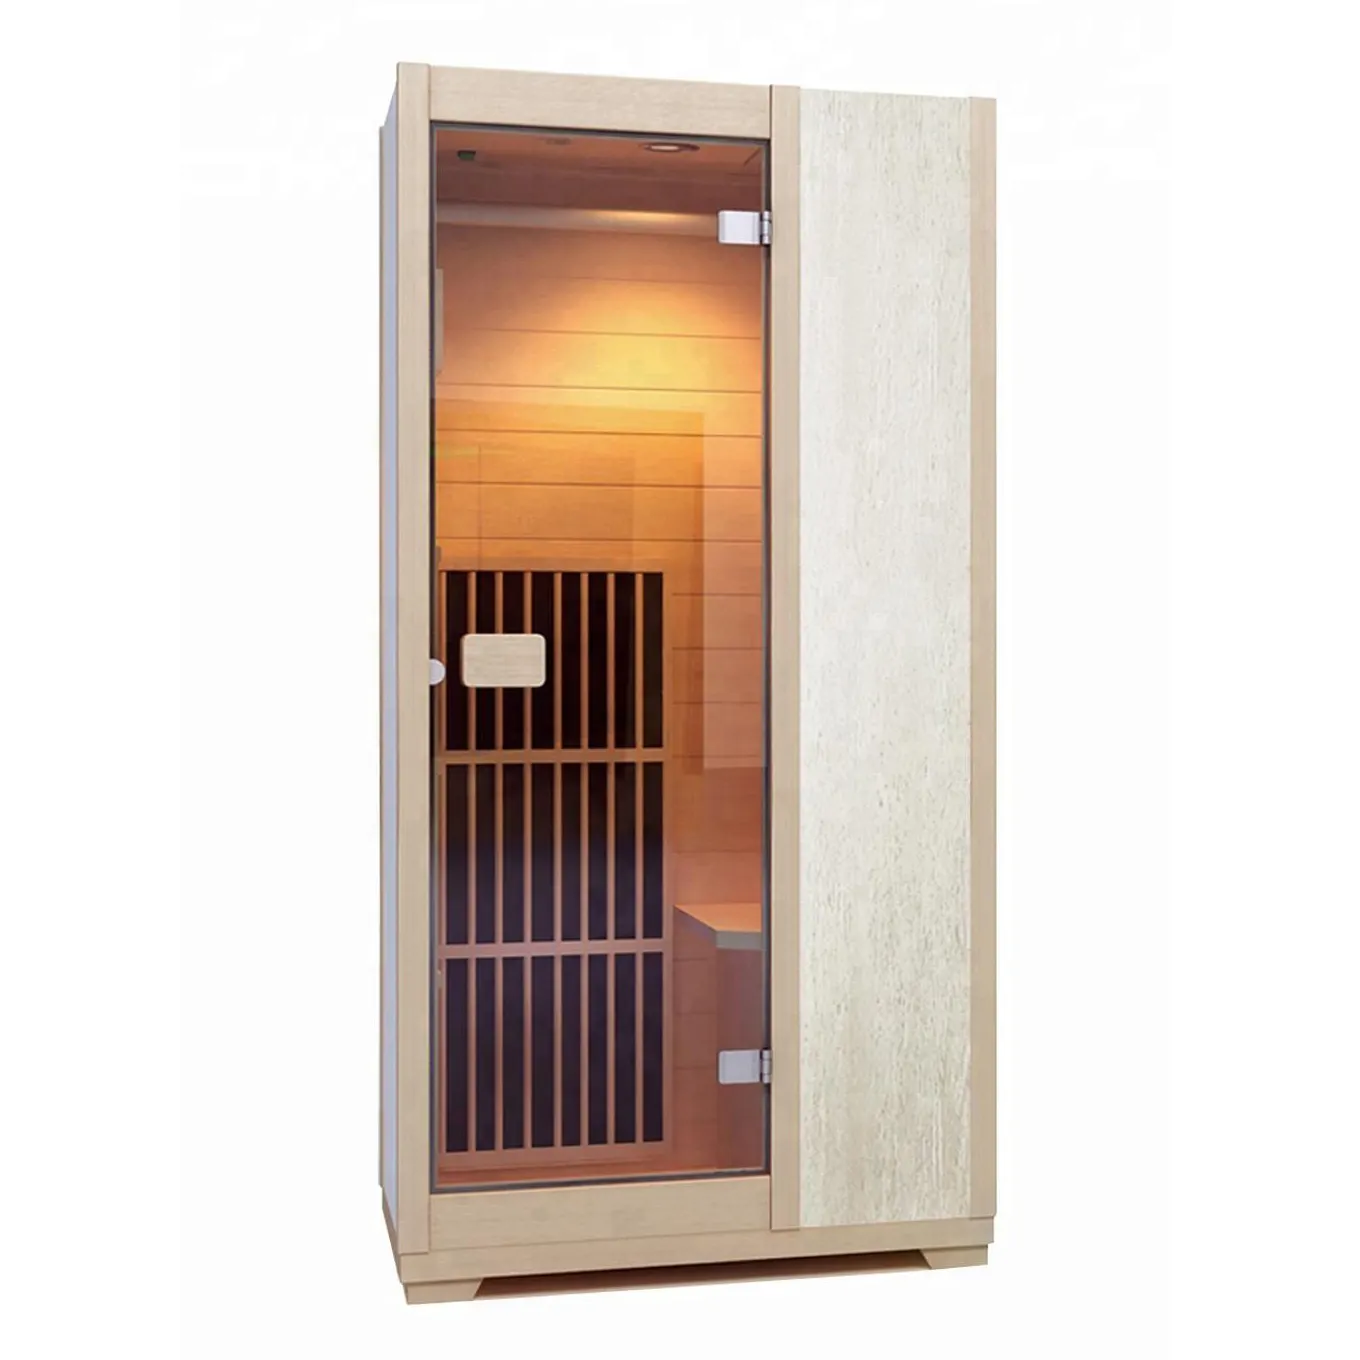 Cabina de Sauna de vapor seco para interior, de madera pequeña Sauna de vapor, esquina, Sauna de vapor infrarrojo